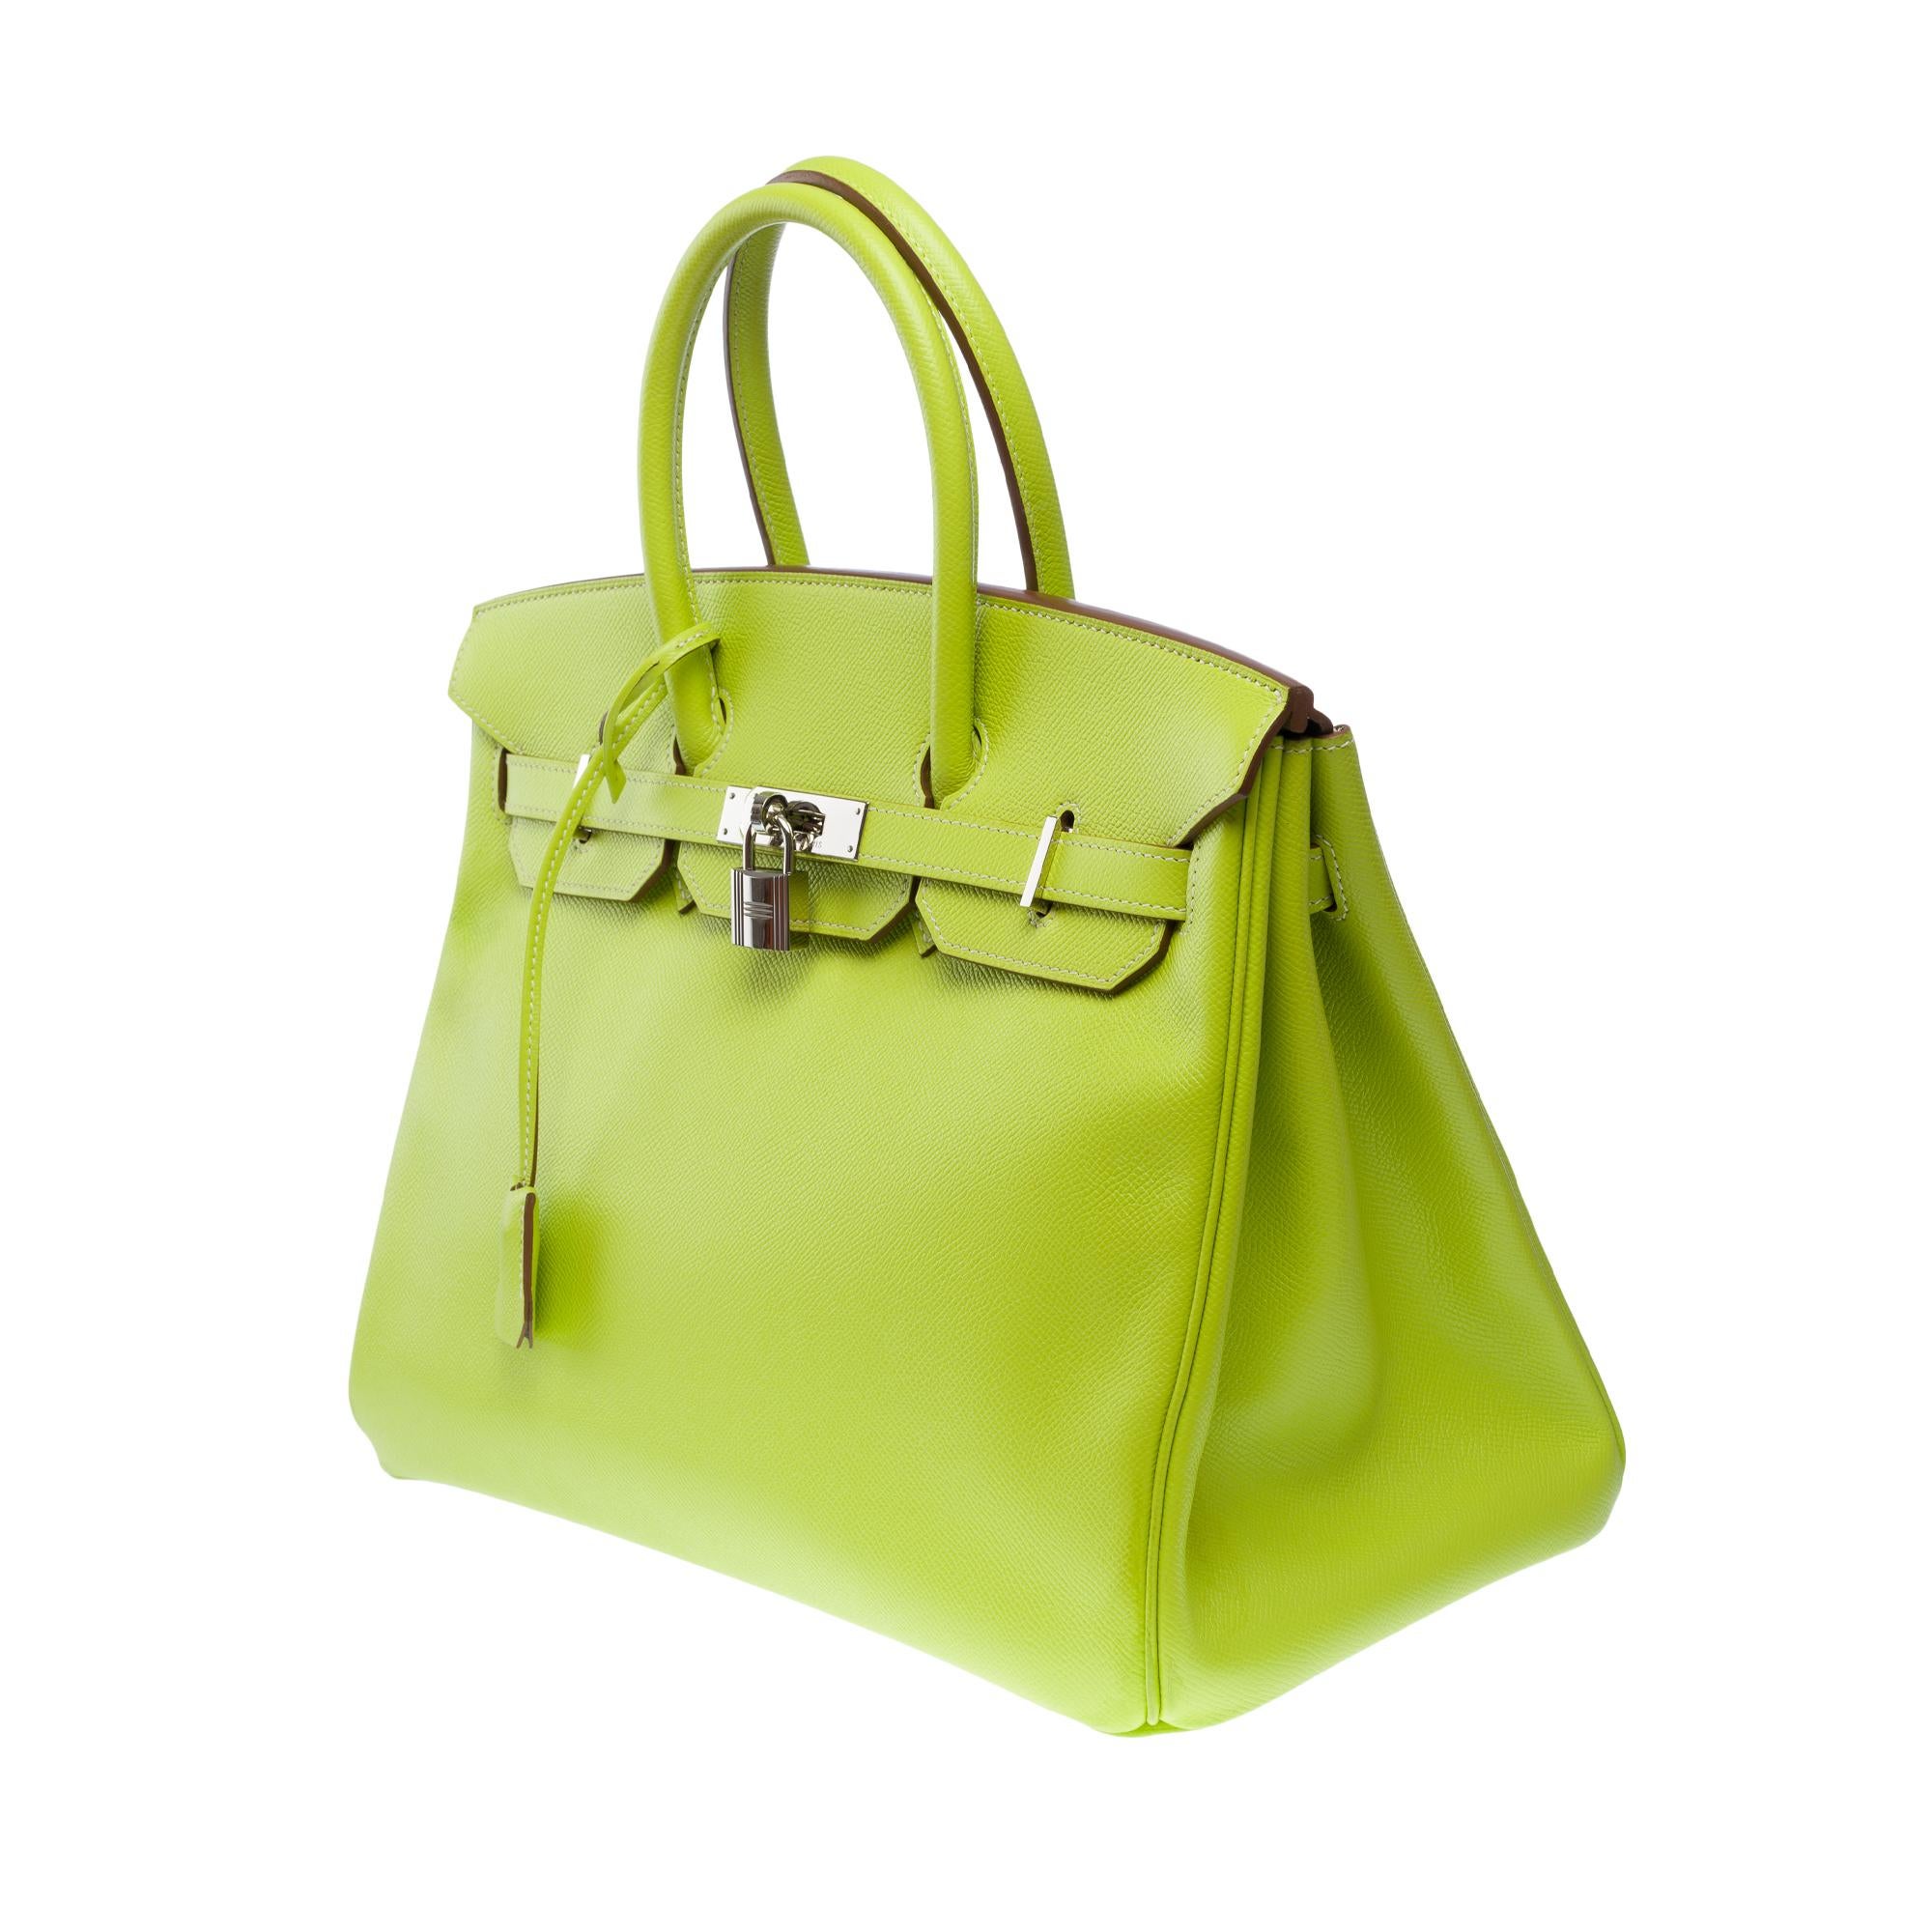 Women's or Men's Candy limited edition Hermès Birkin 35 handbag in Kiwi Green epsom leather, SHW